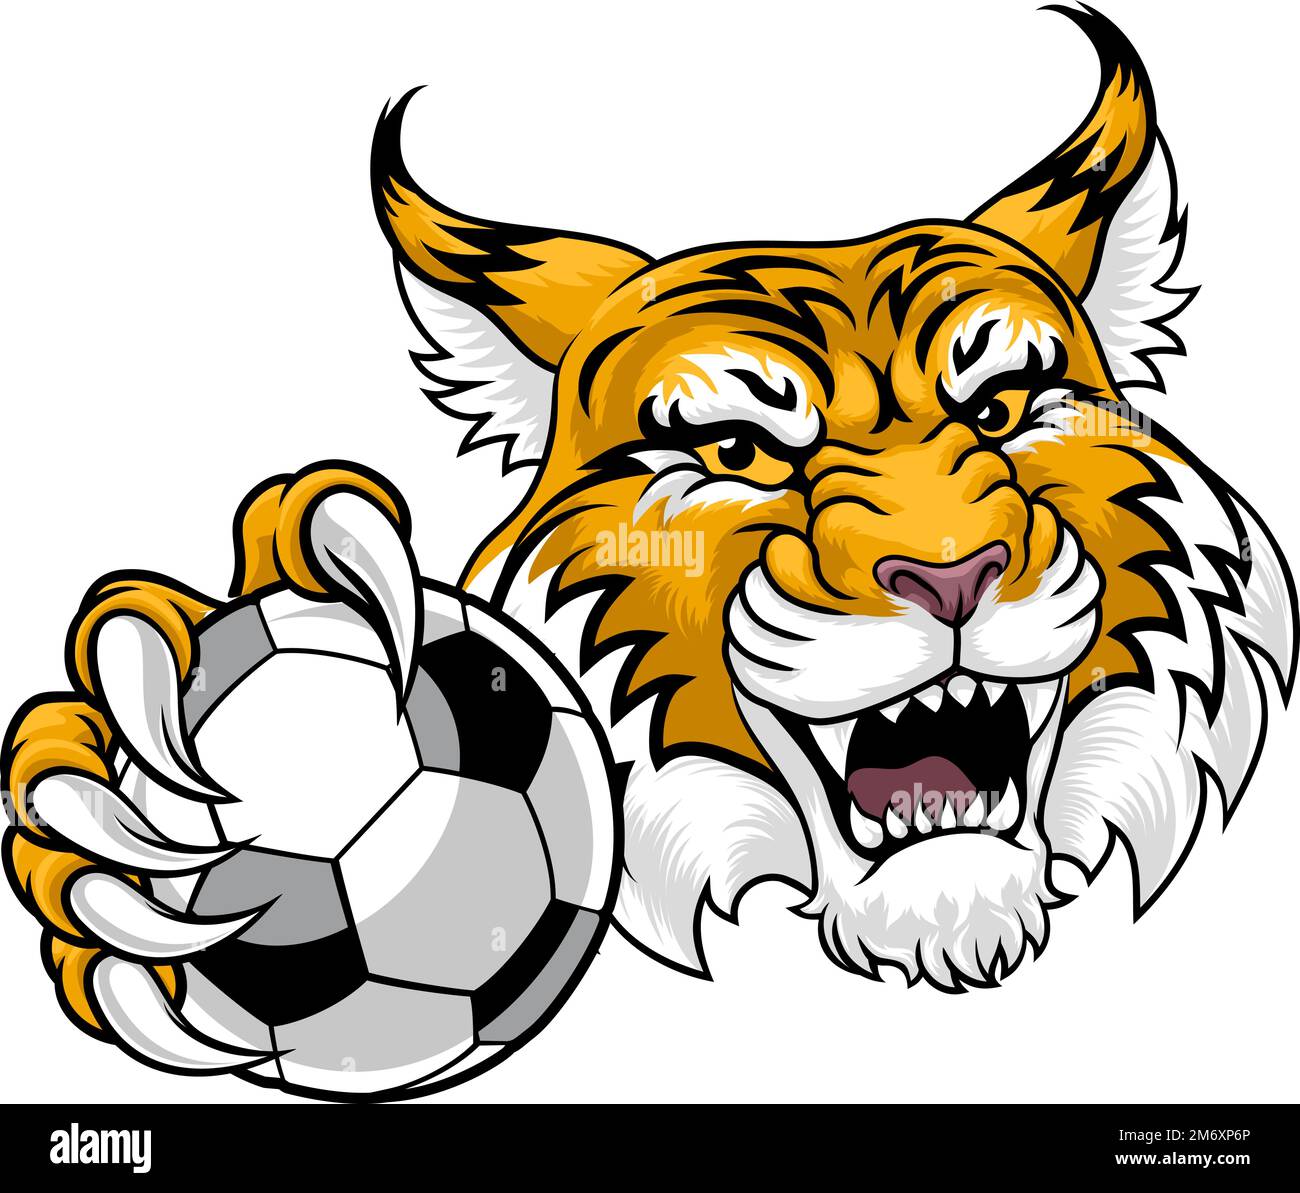 Wildcat Bobcat Soccer Football Animal Team Mascot Stock Vector